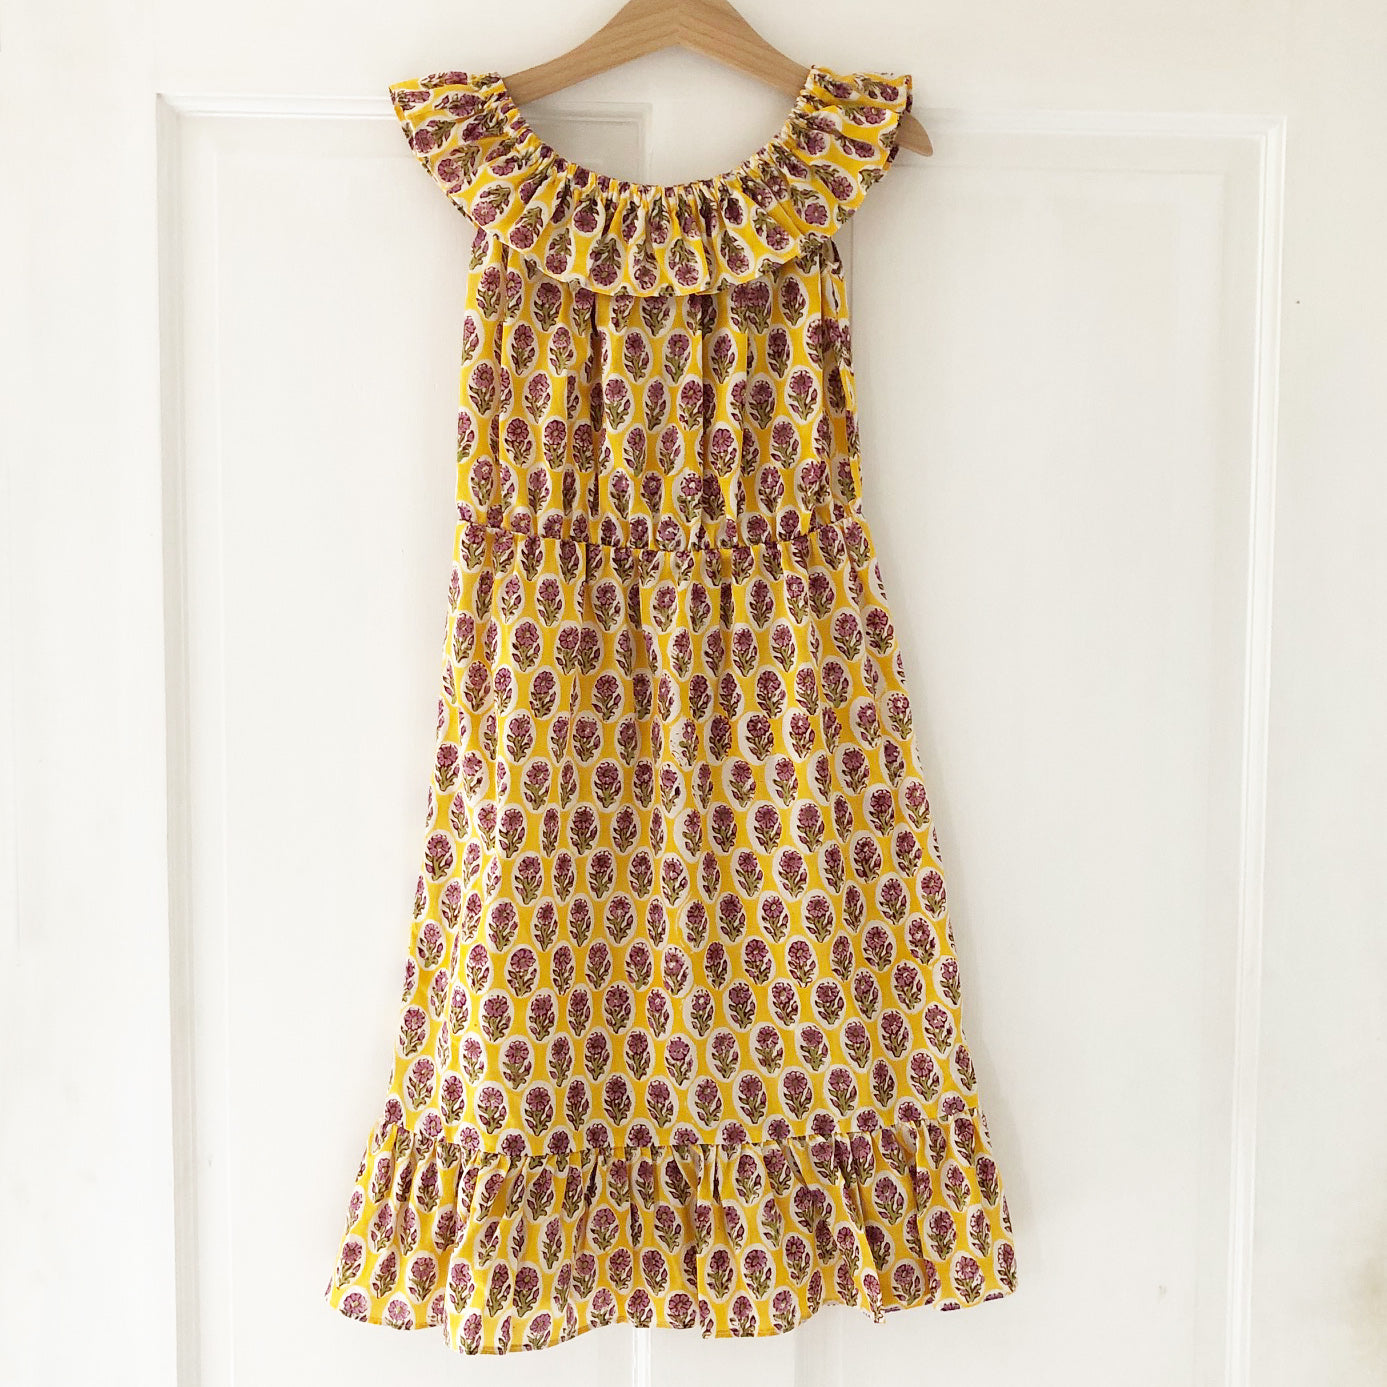 Ella Re-purposed Ruffle Top Dress in Yellow block print size 4